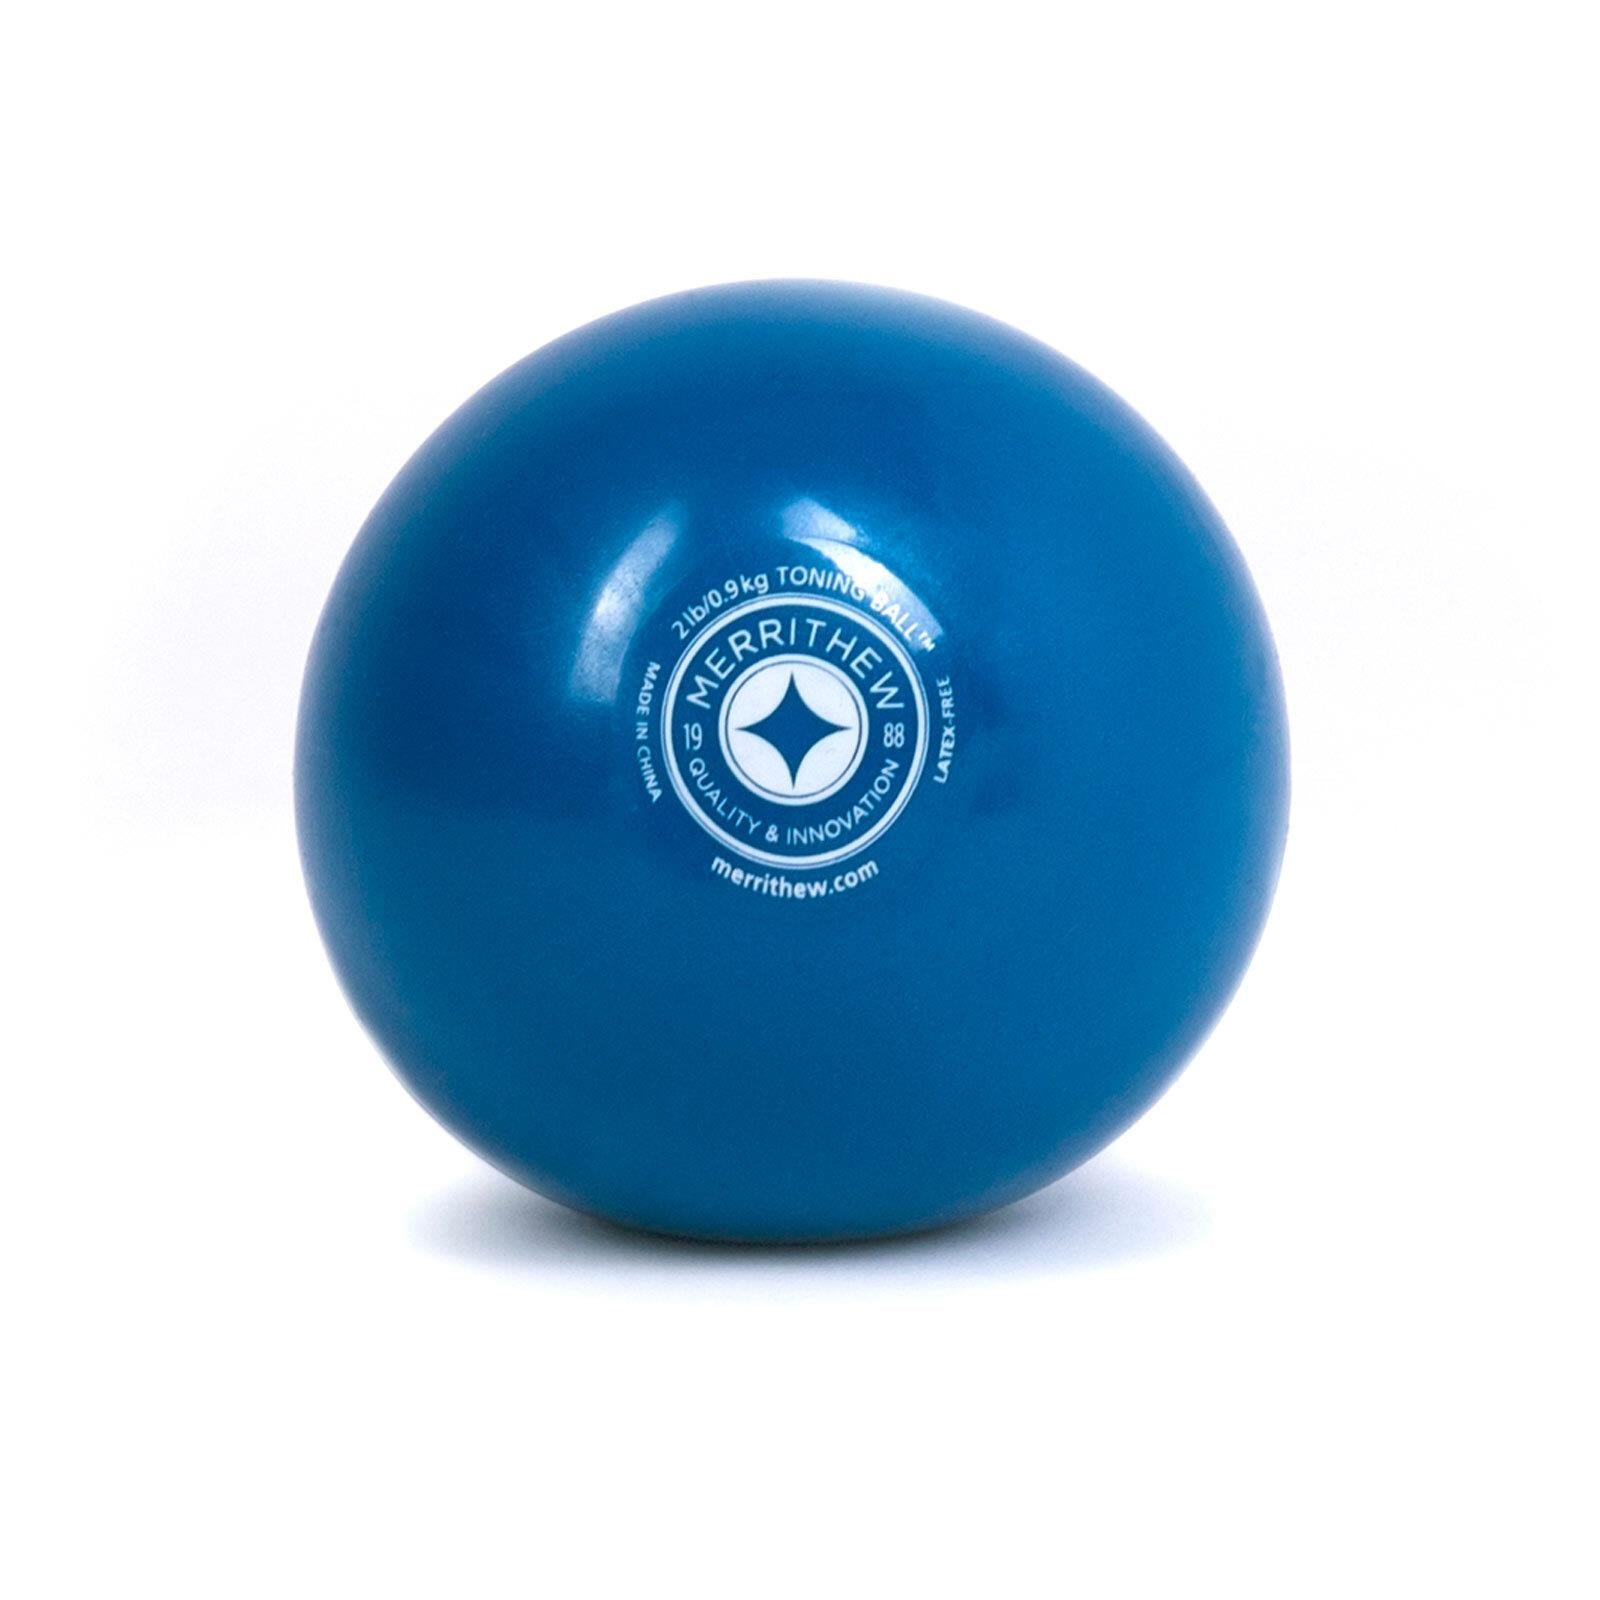 Merrithew - Toning Ball